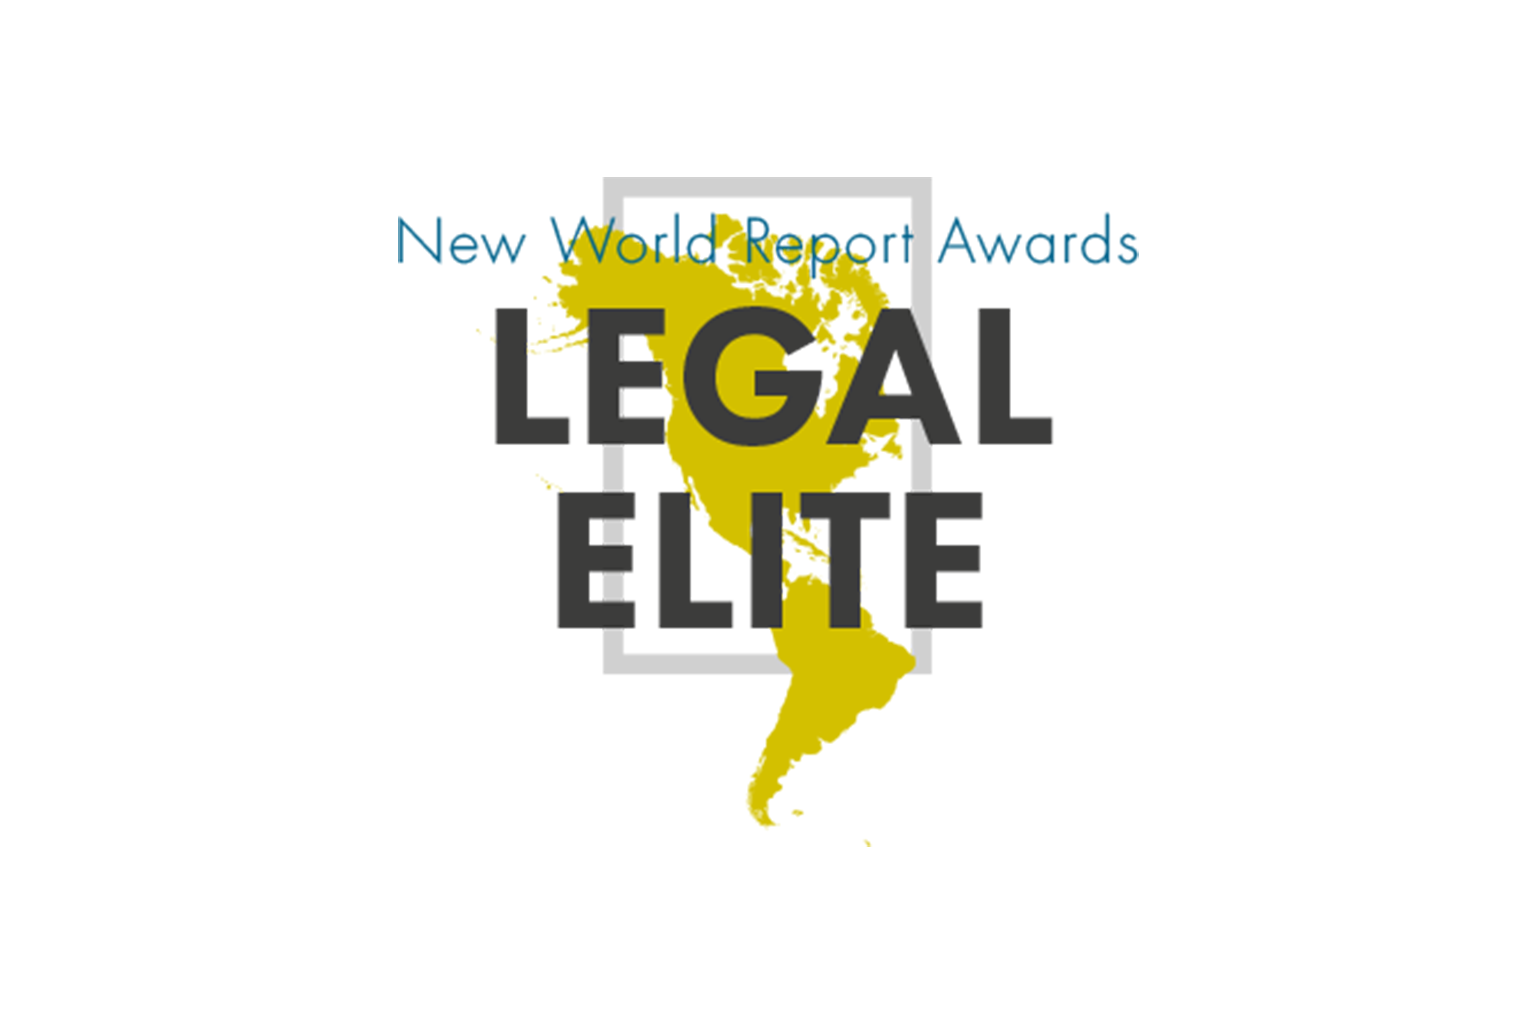 New World Report Legal Elite Awards